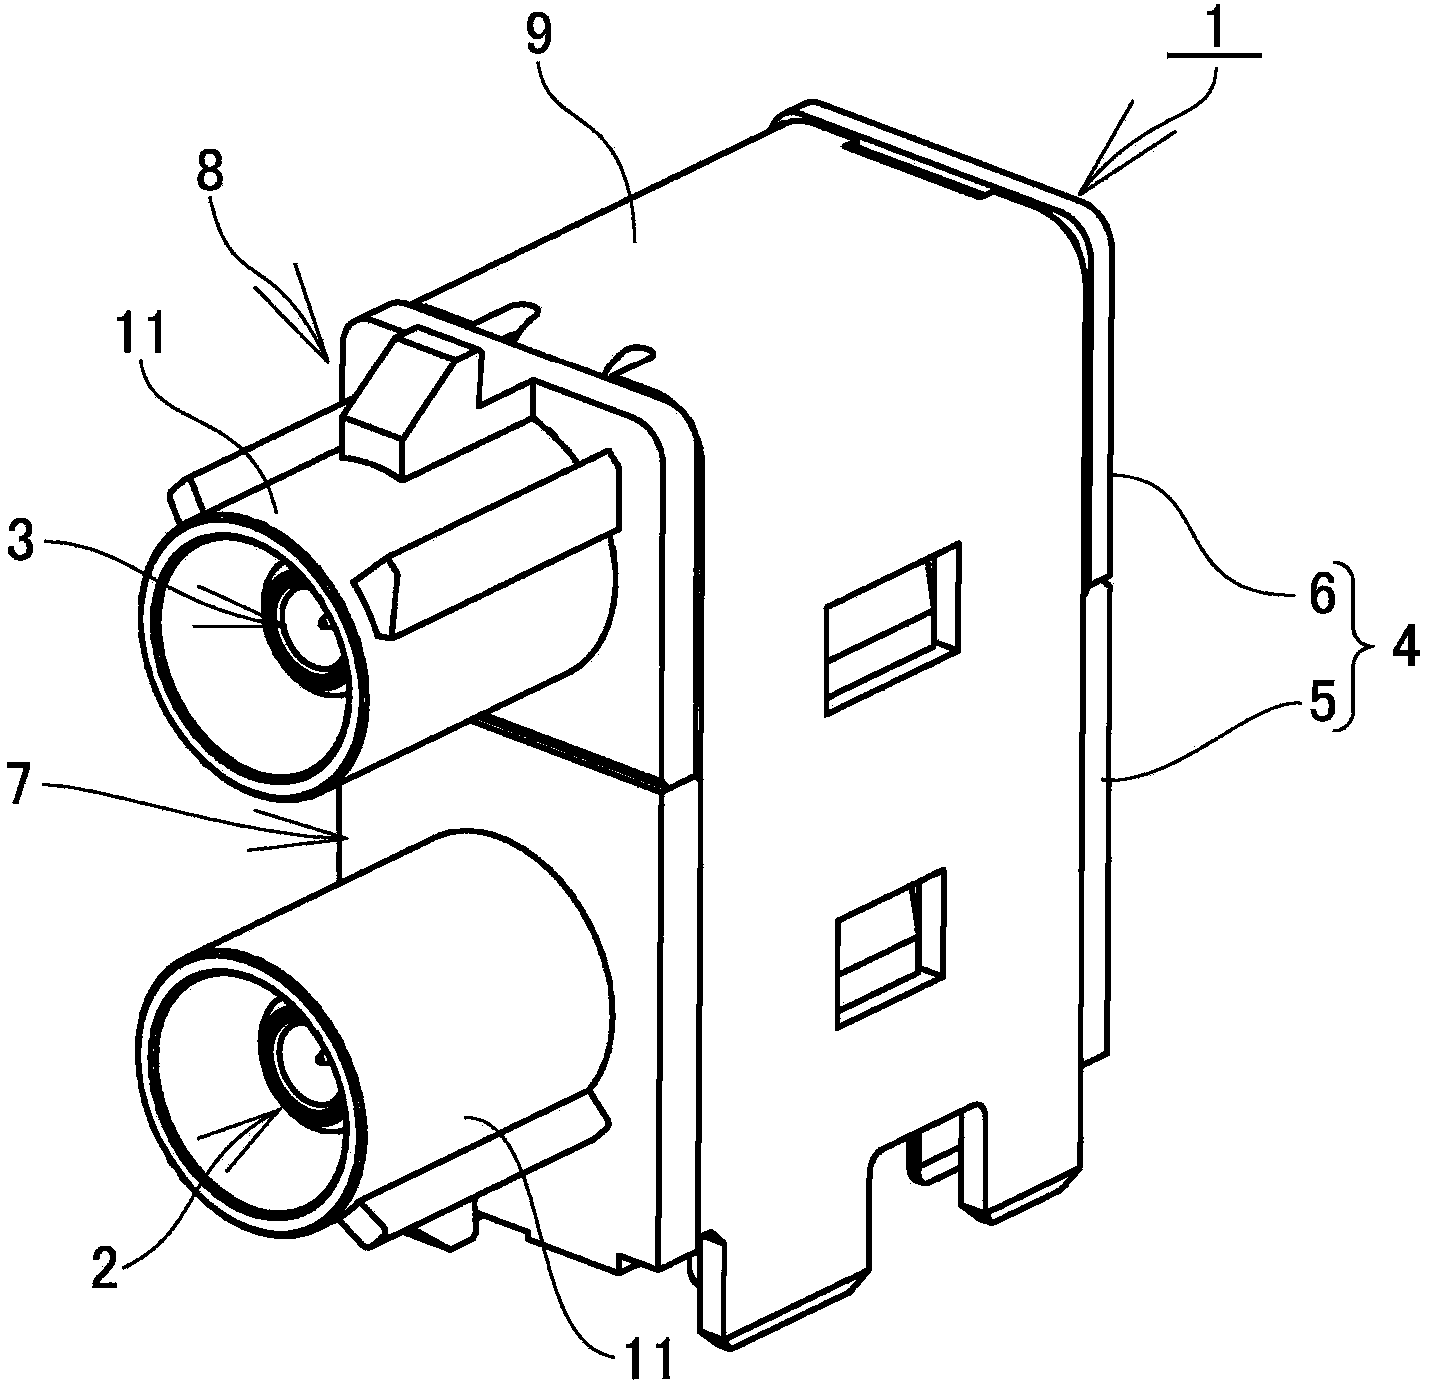 Multi-pole connector